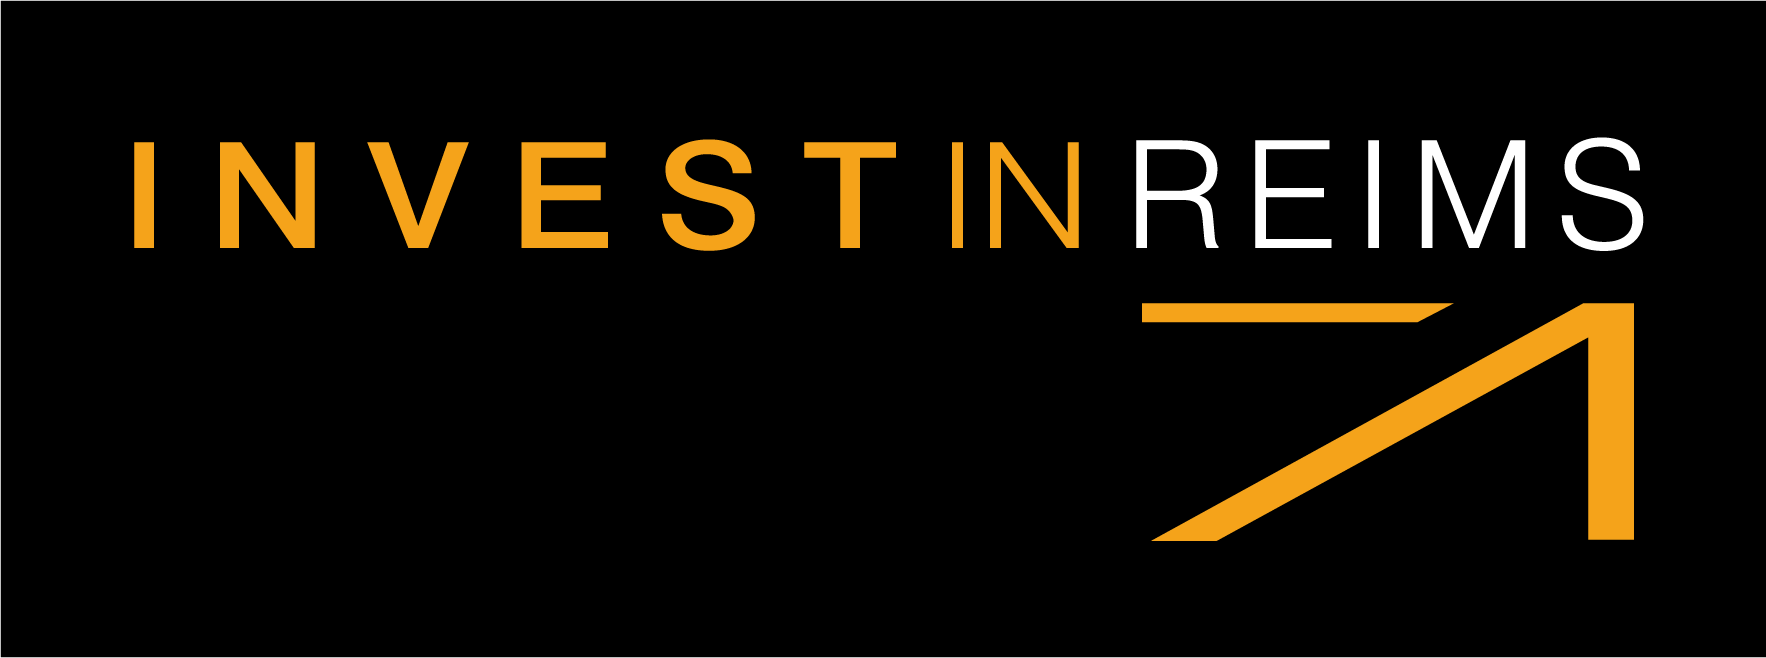 invest in reims logo